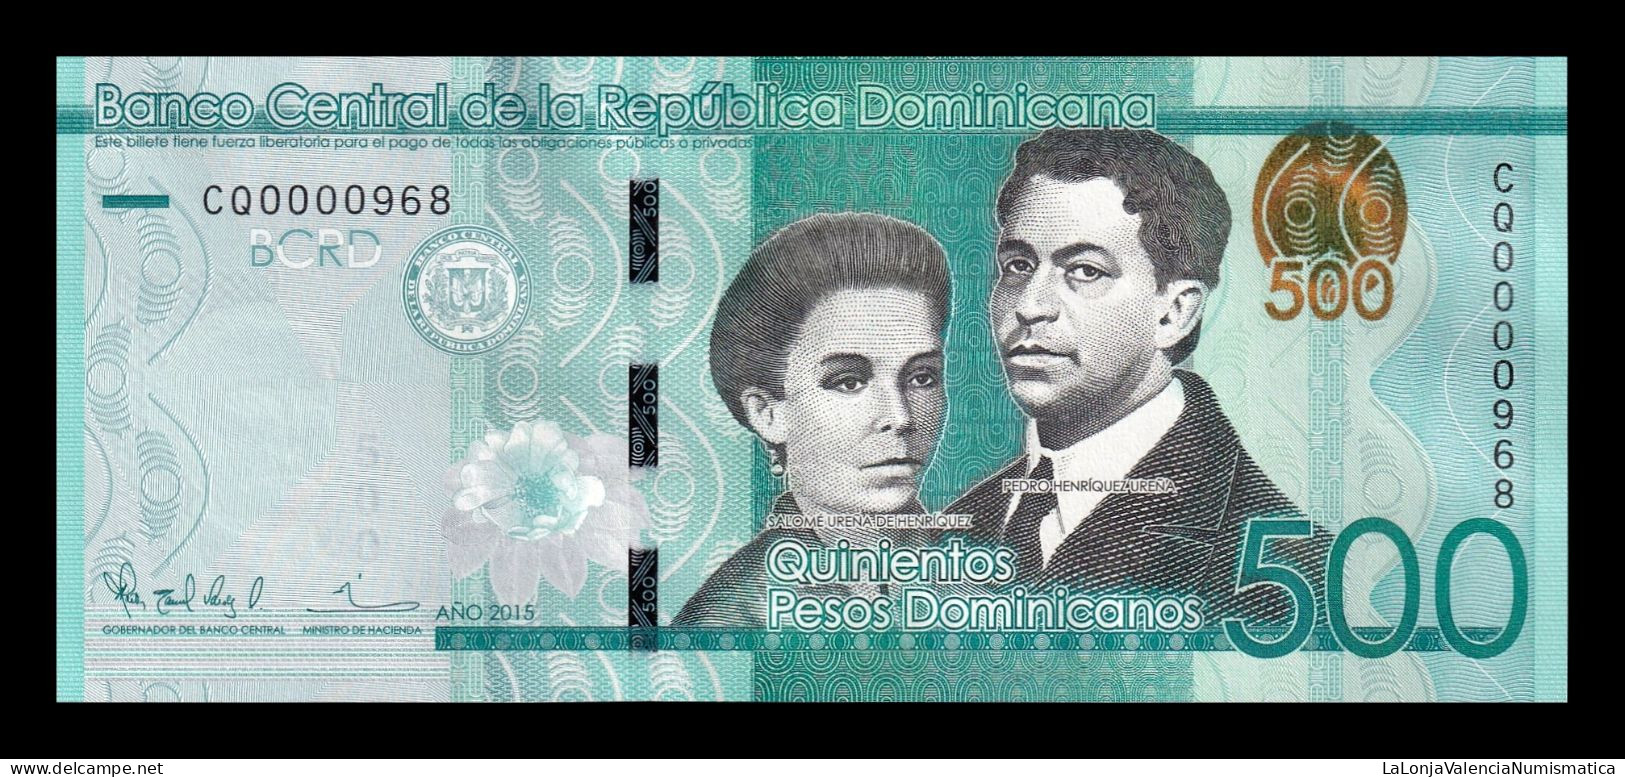 República Dominicana 500 Pesos Dominicanos 2015 Pick 192b Low Serial 968 Sc Unc - República Dominicana